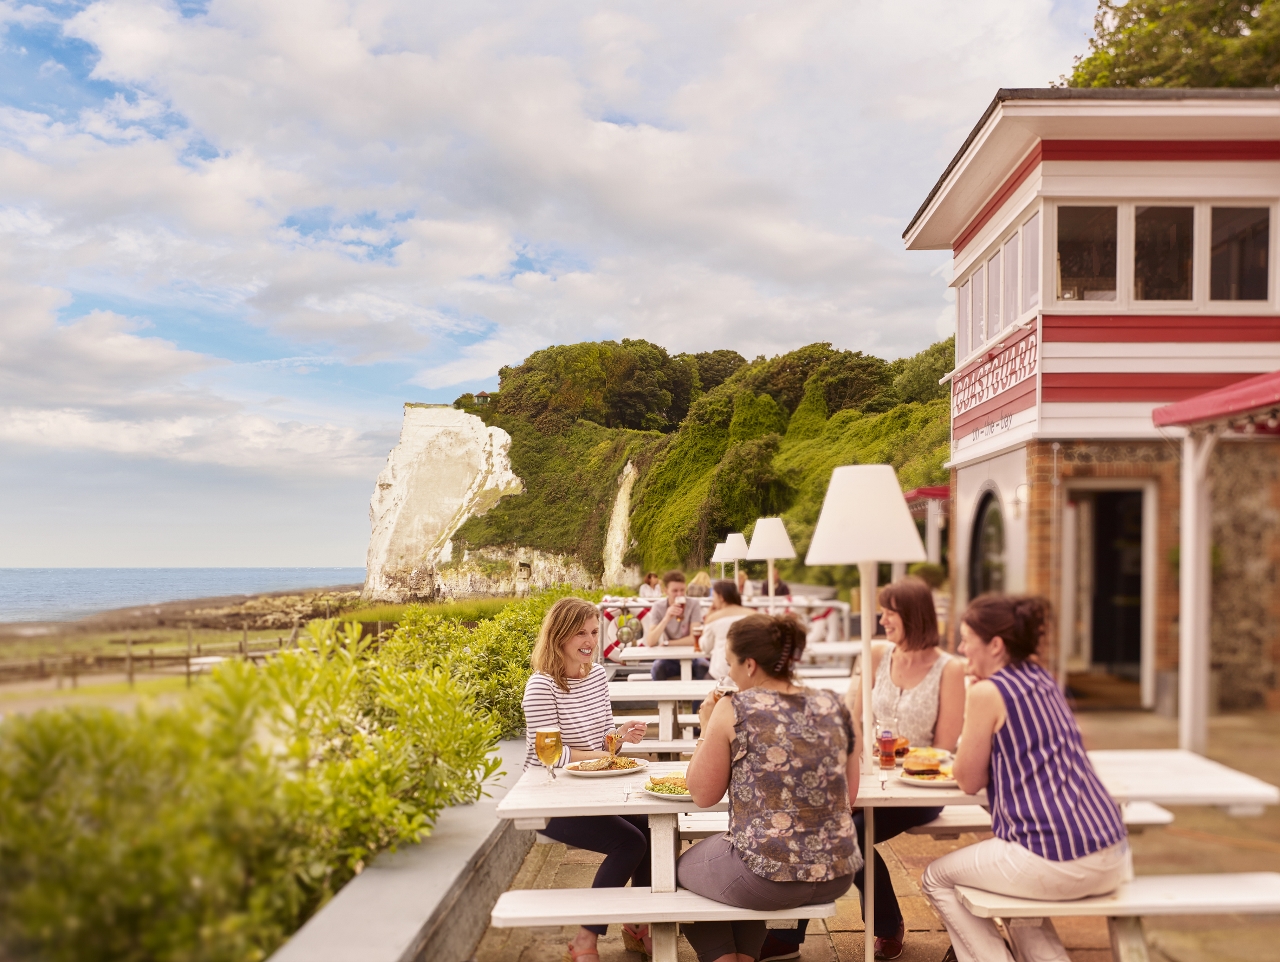 Seaside pub restaurant The Coastguard in St Margaret's Bay underwent a £250,000 makeover in 2016